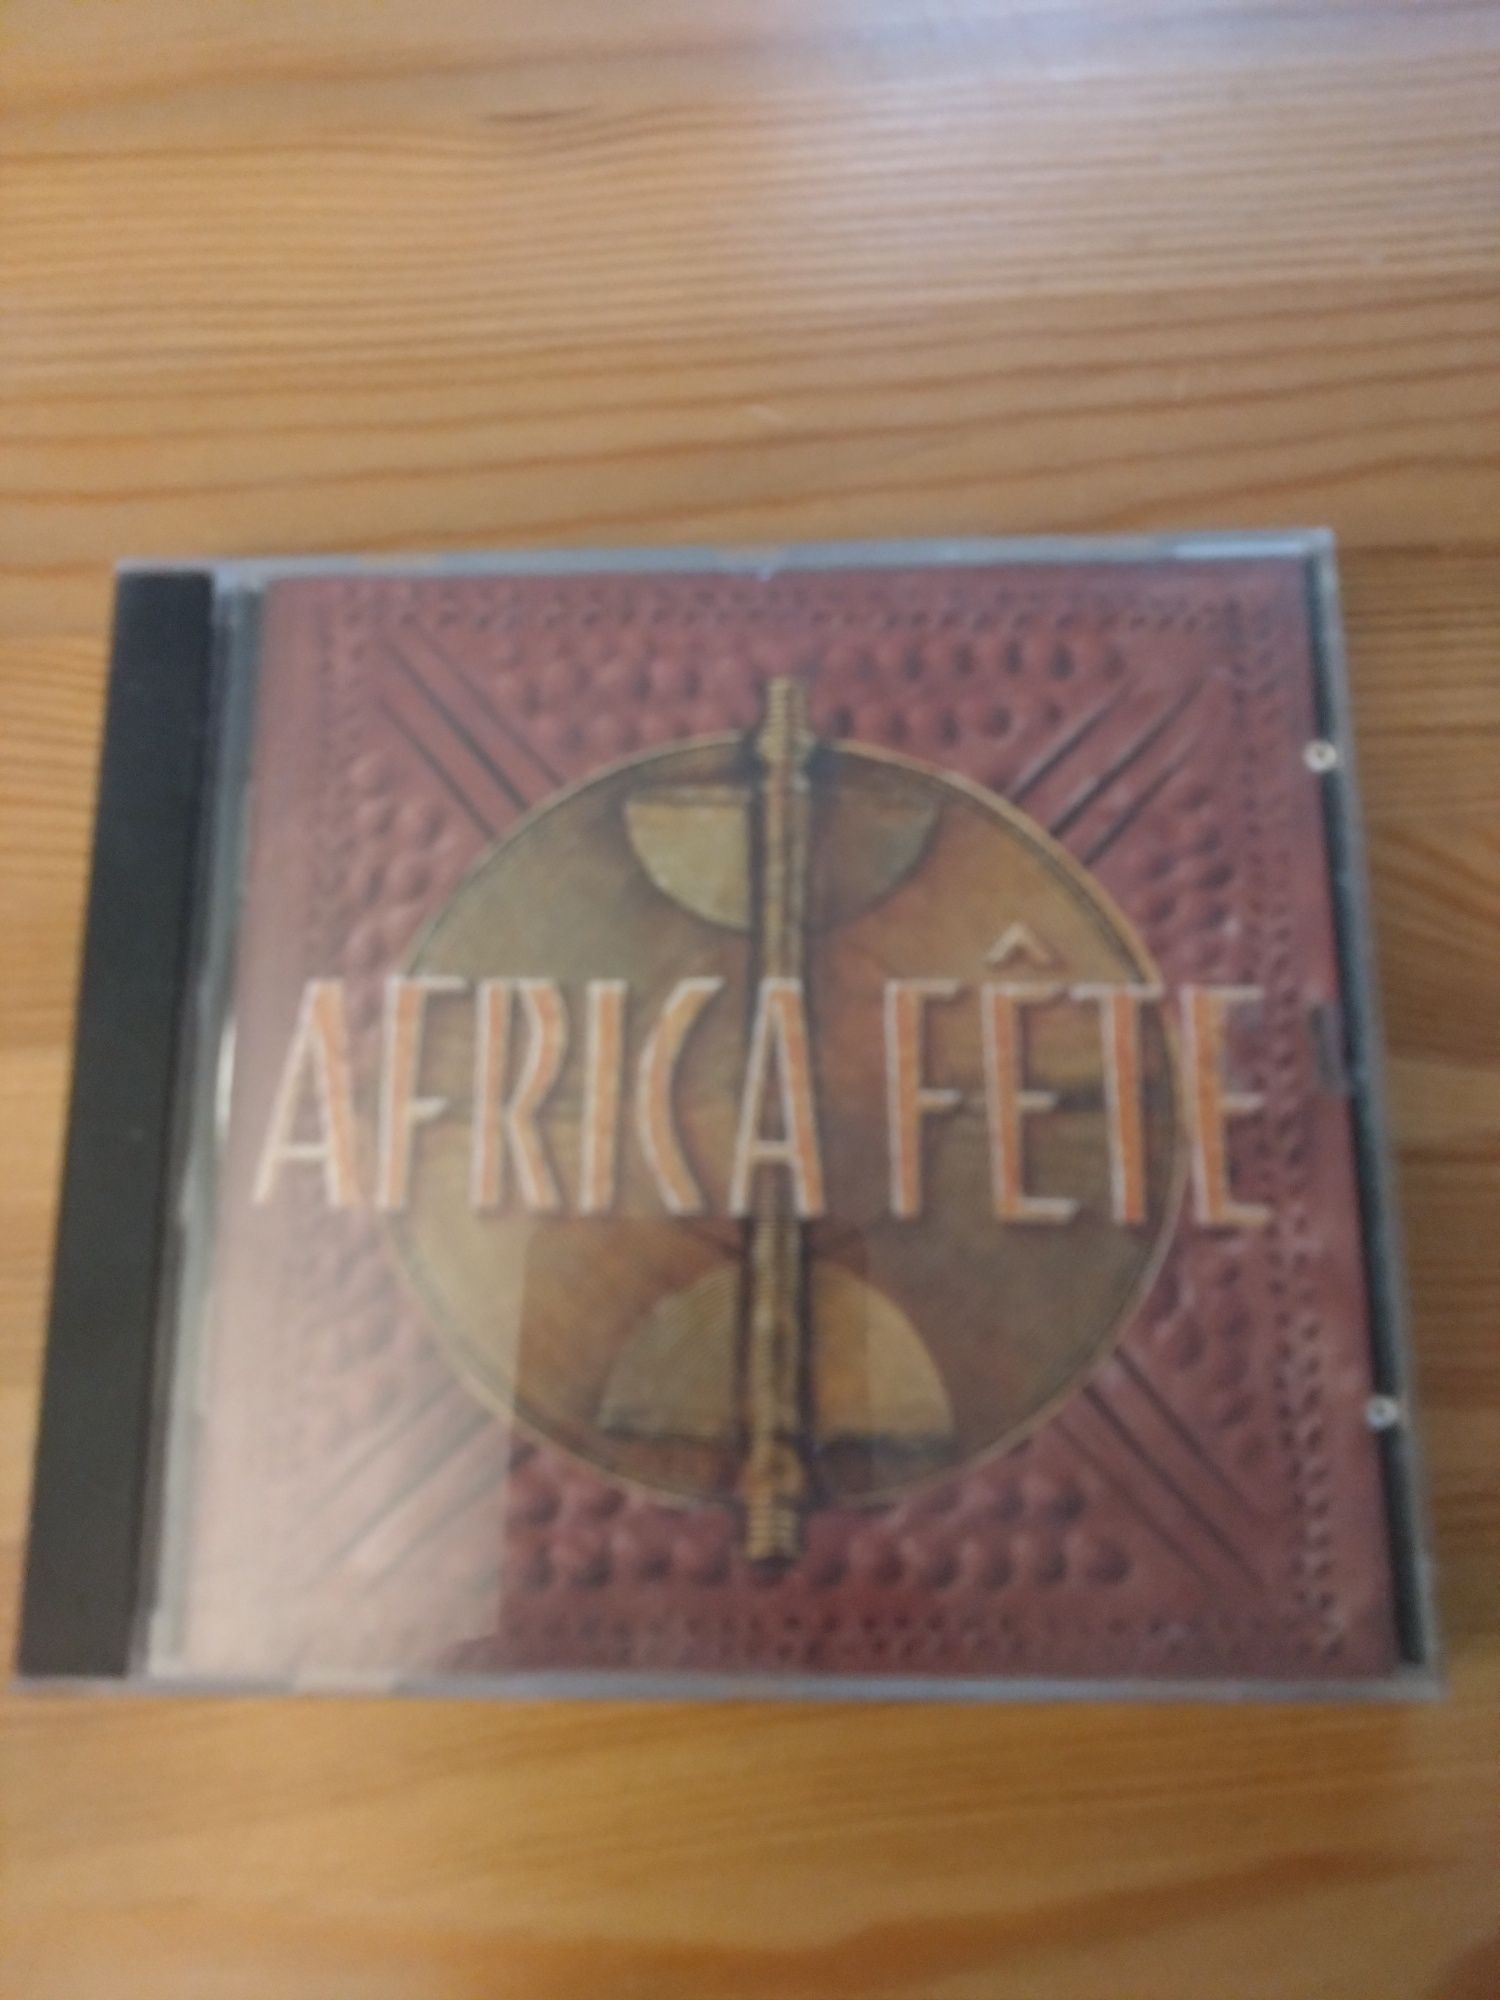 Africa fete płyta cd